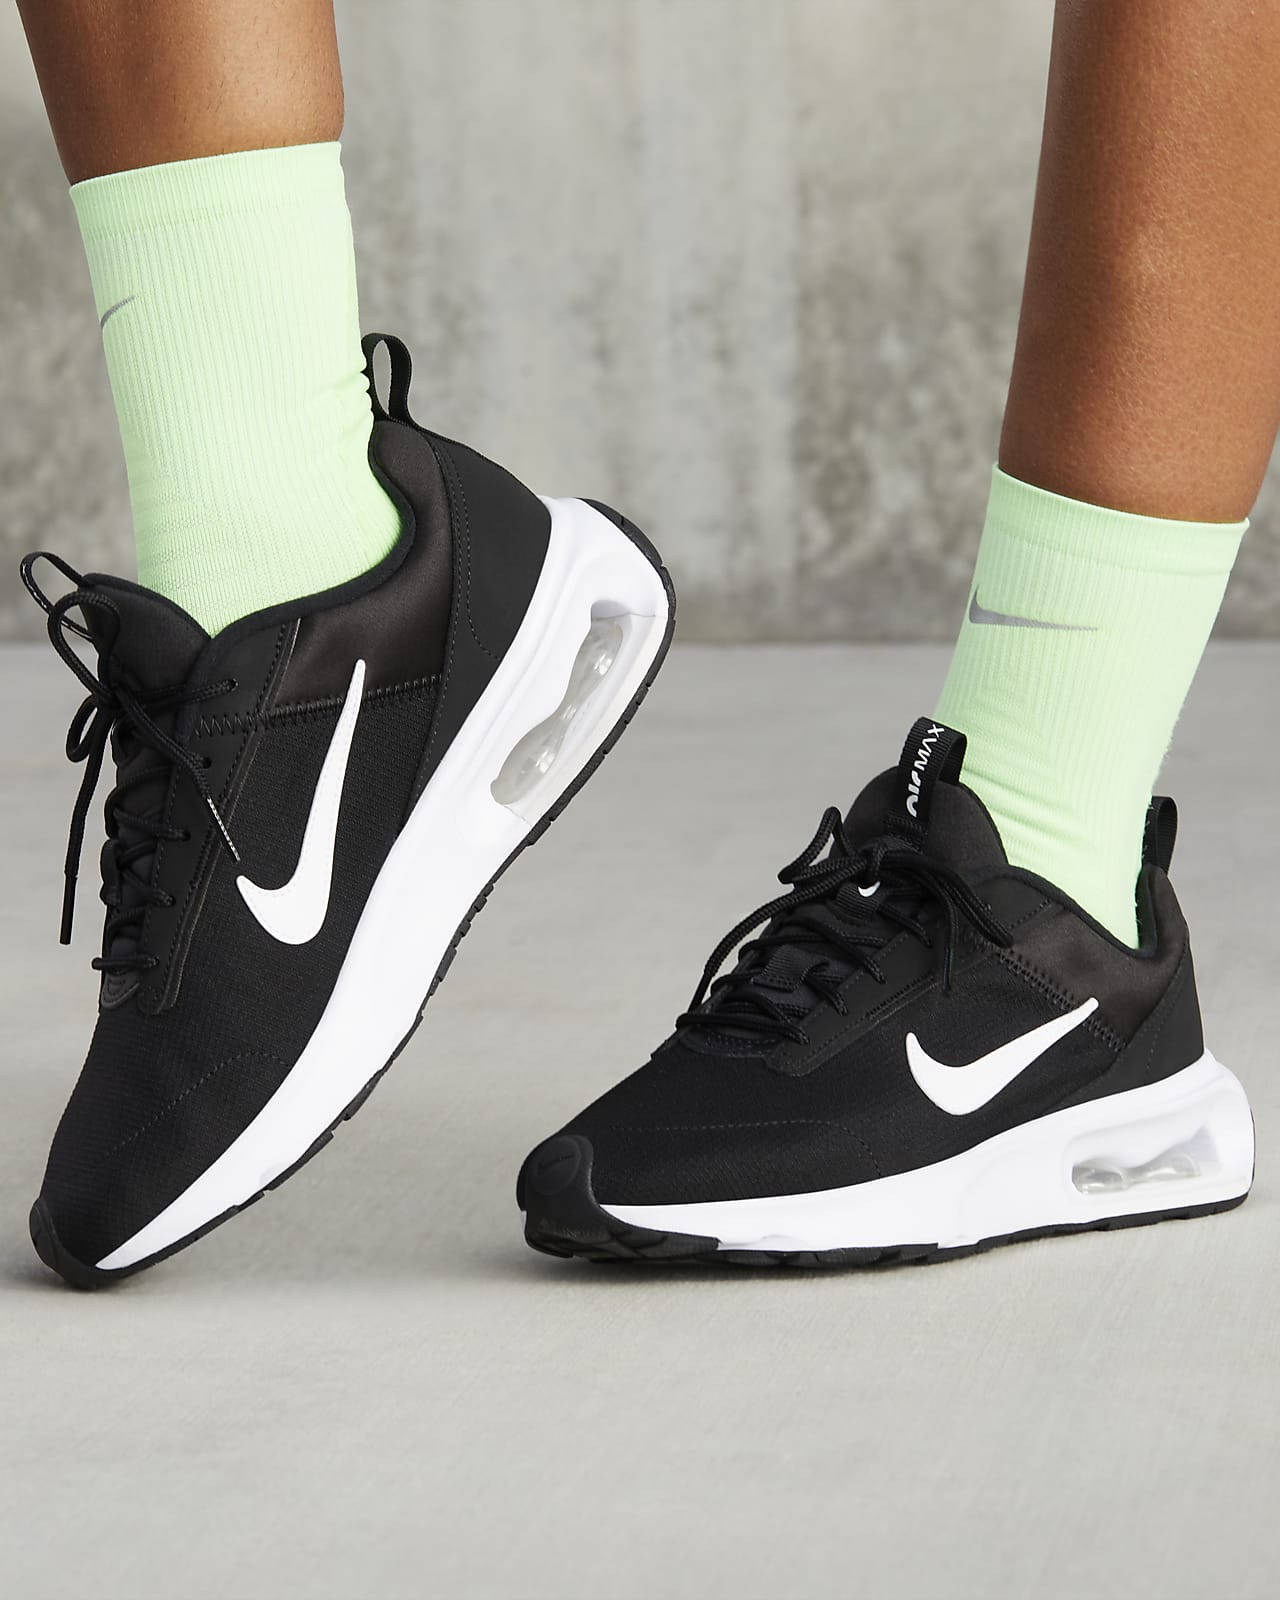  Nike Women's Air Max INTRLK Lite Shoes,  Black/White/Anthracite, 8